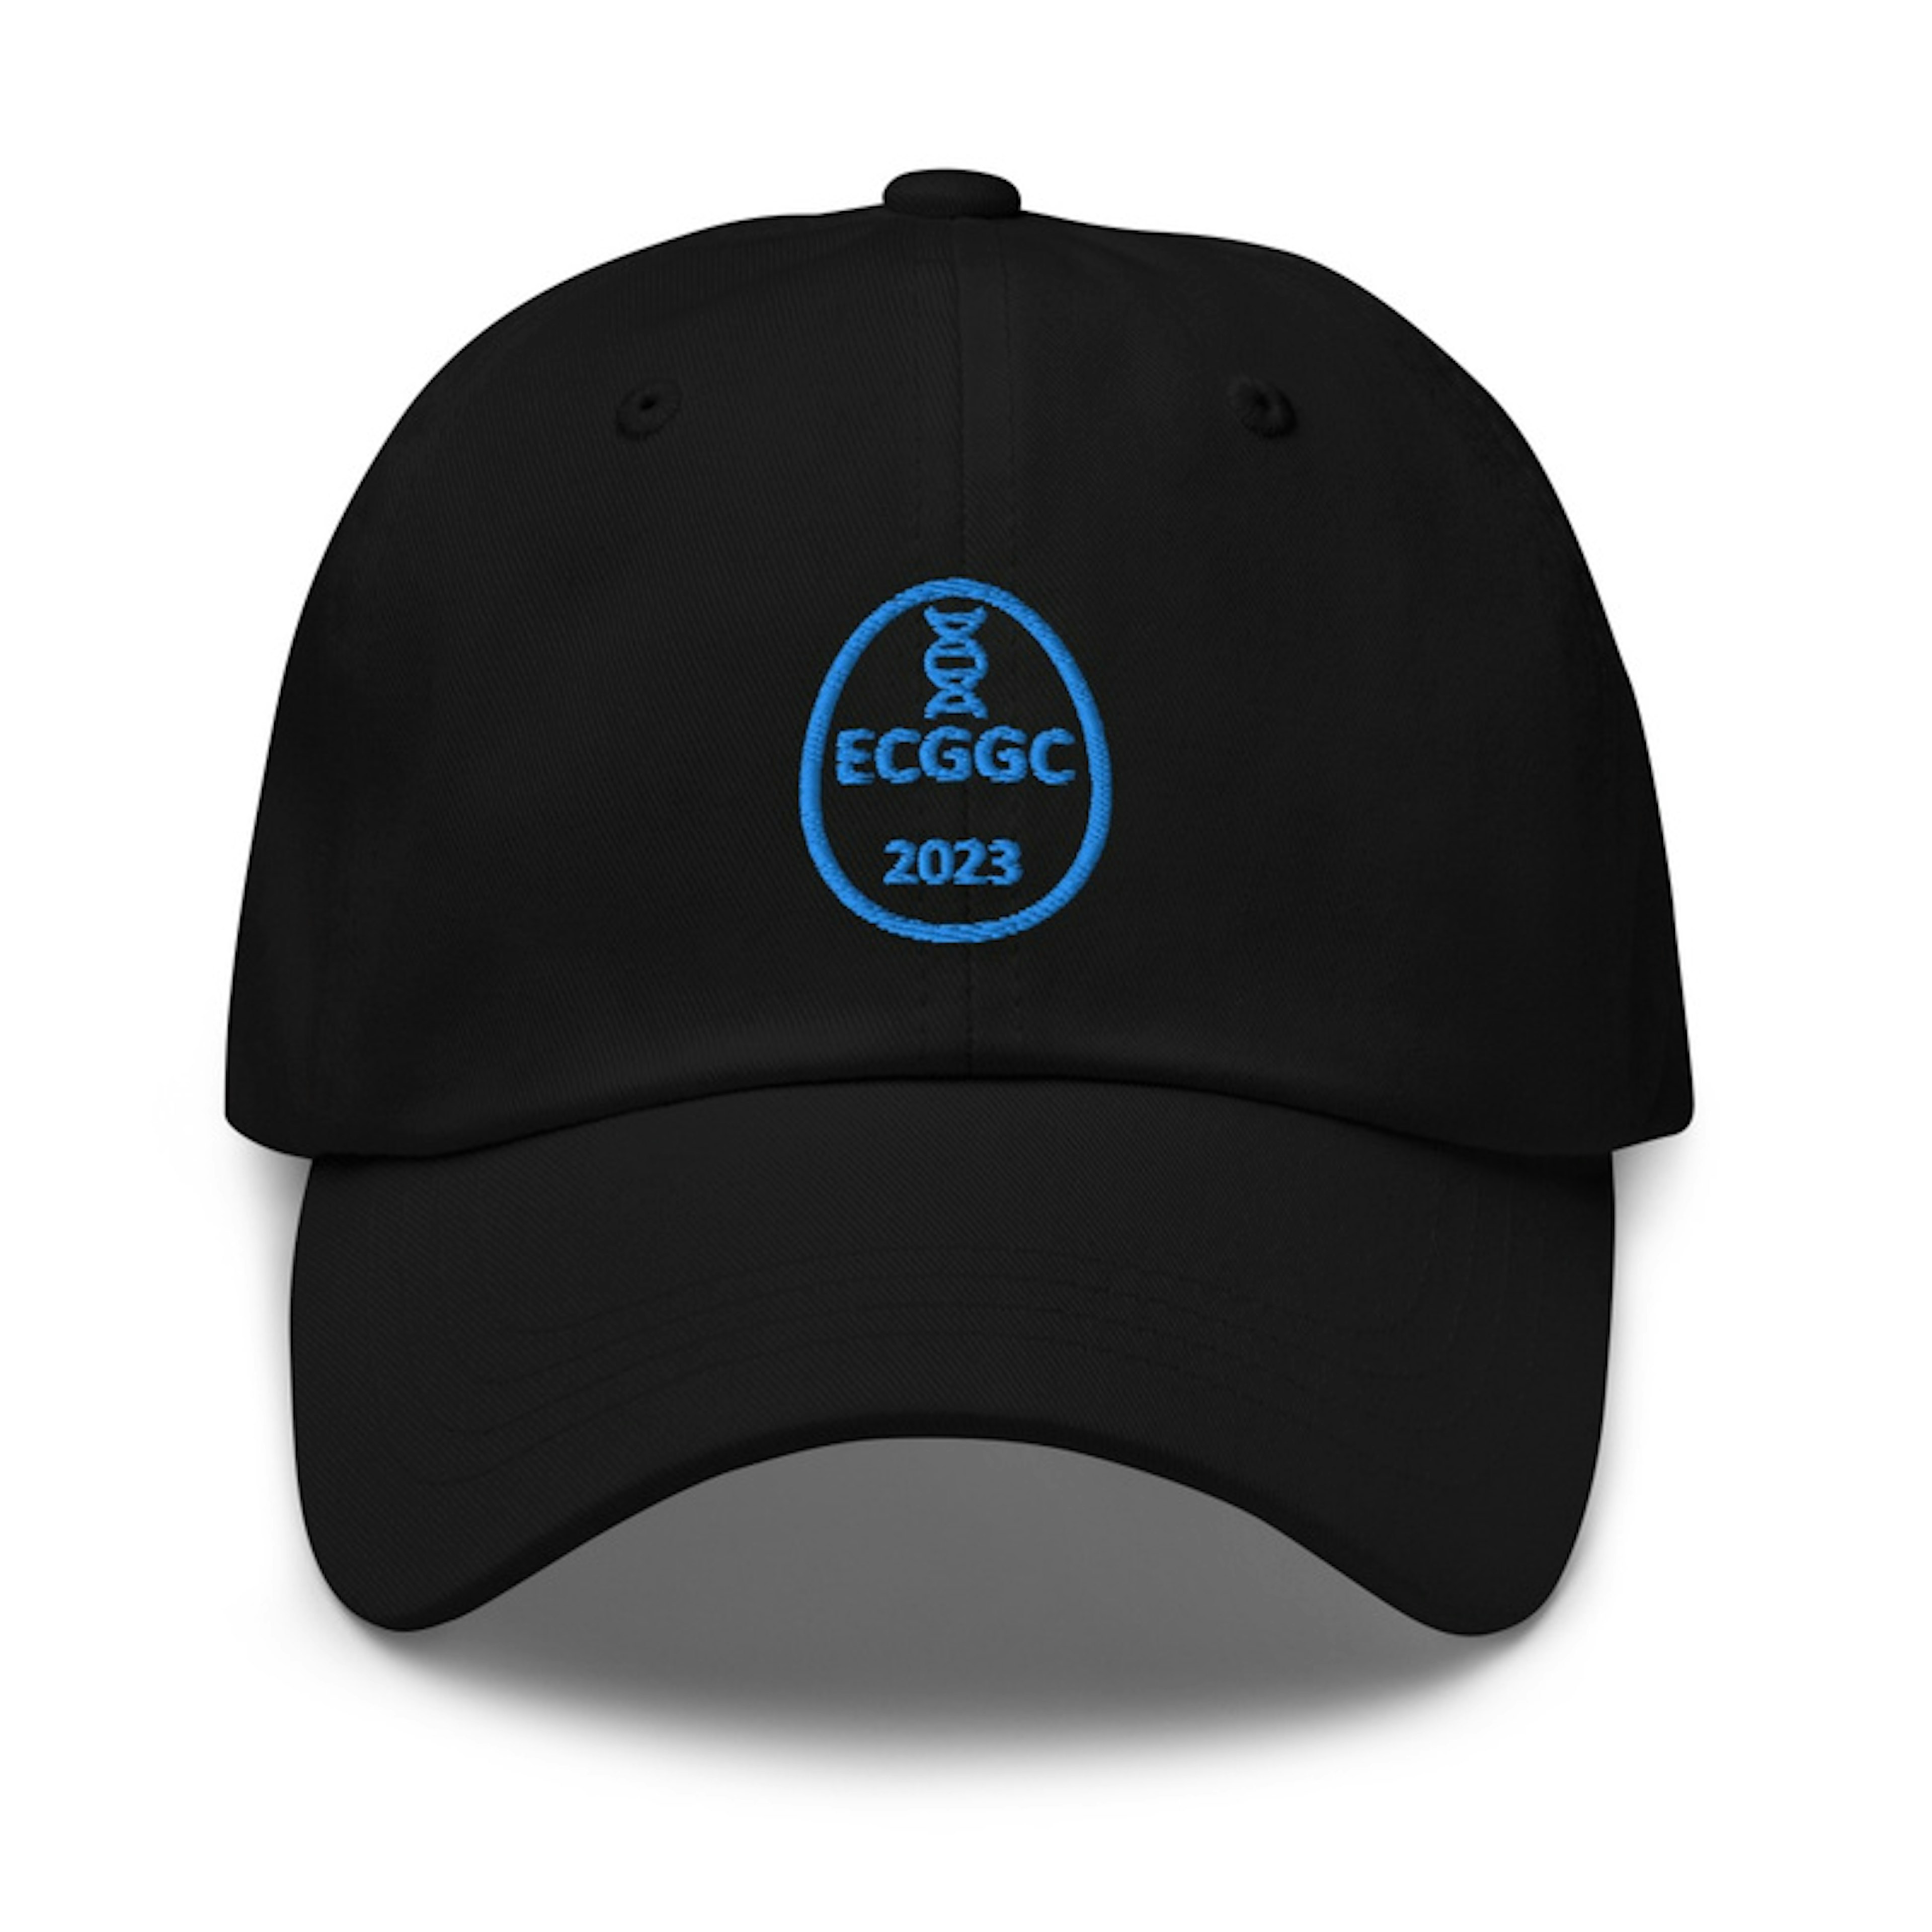 ECGGC 2023 Hat